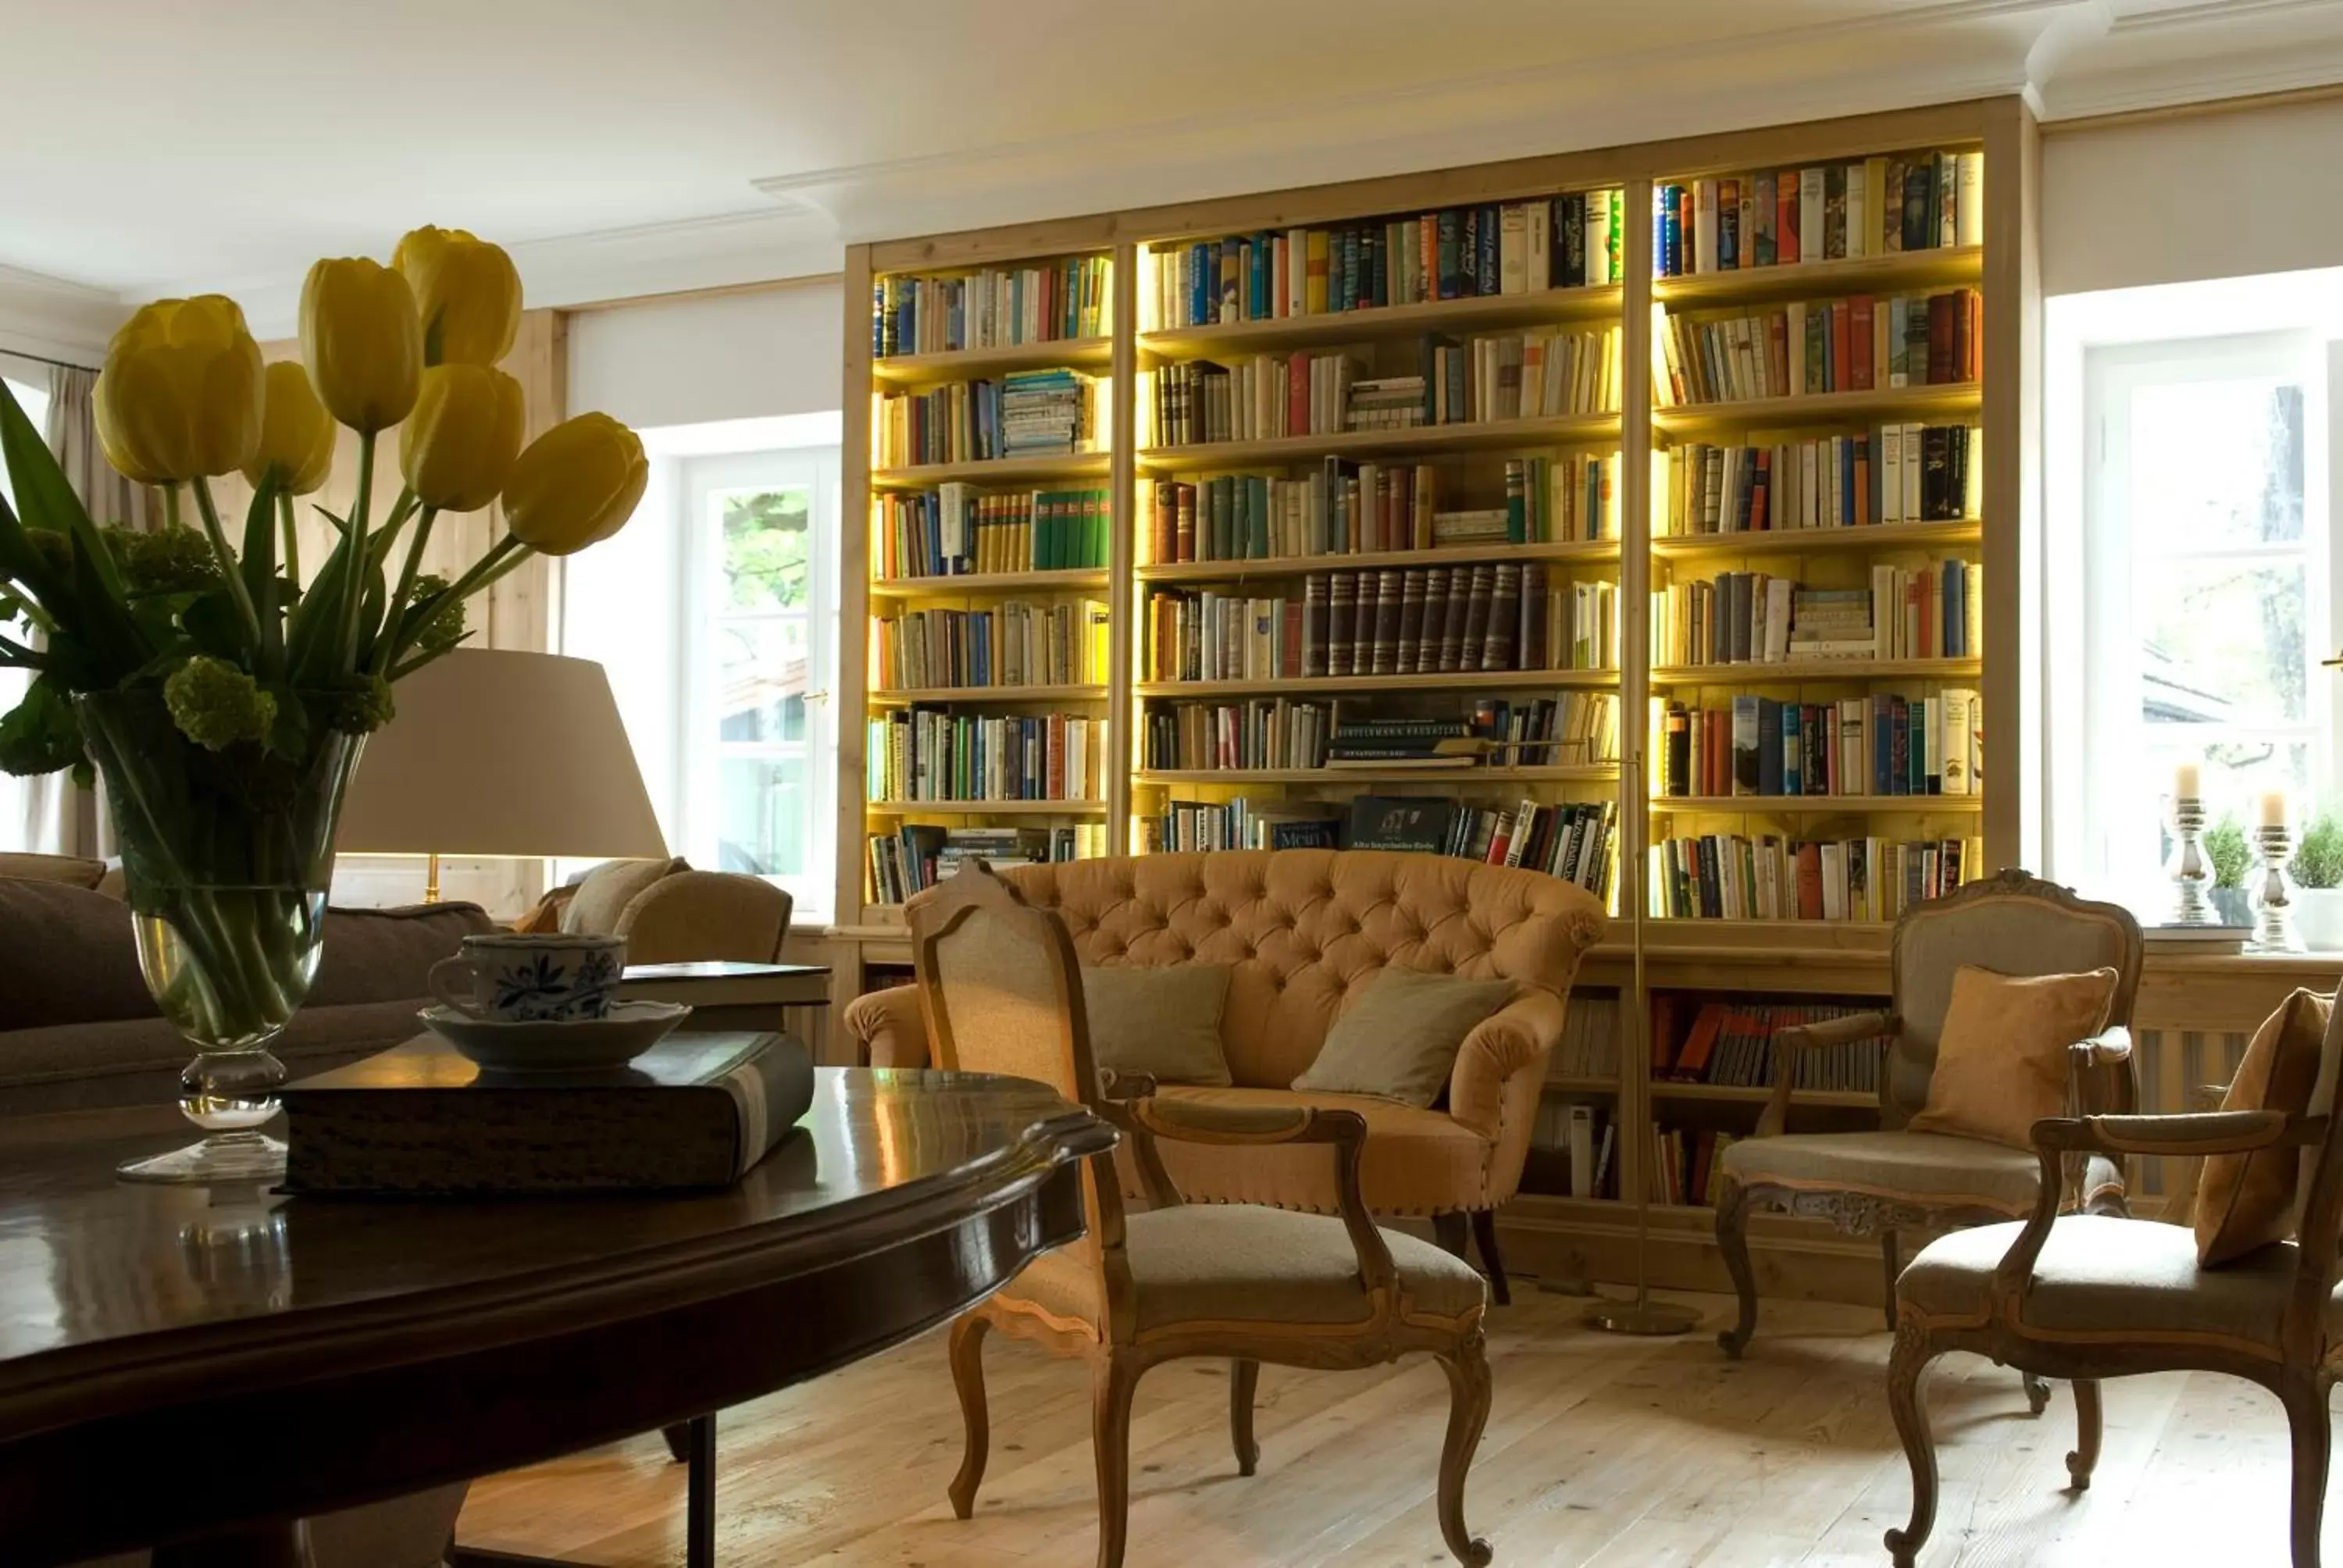 Library in Brauereigasthof-Hotel Aying